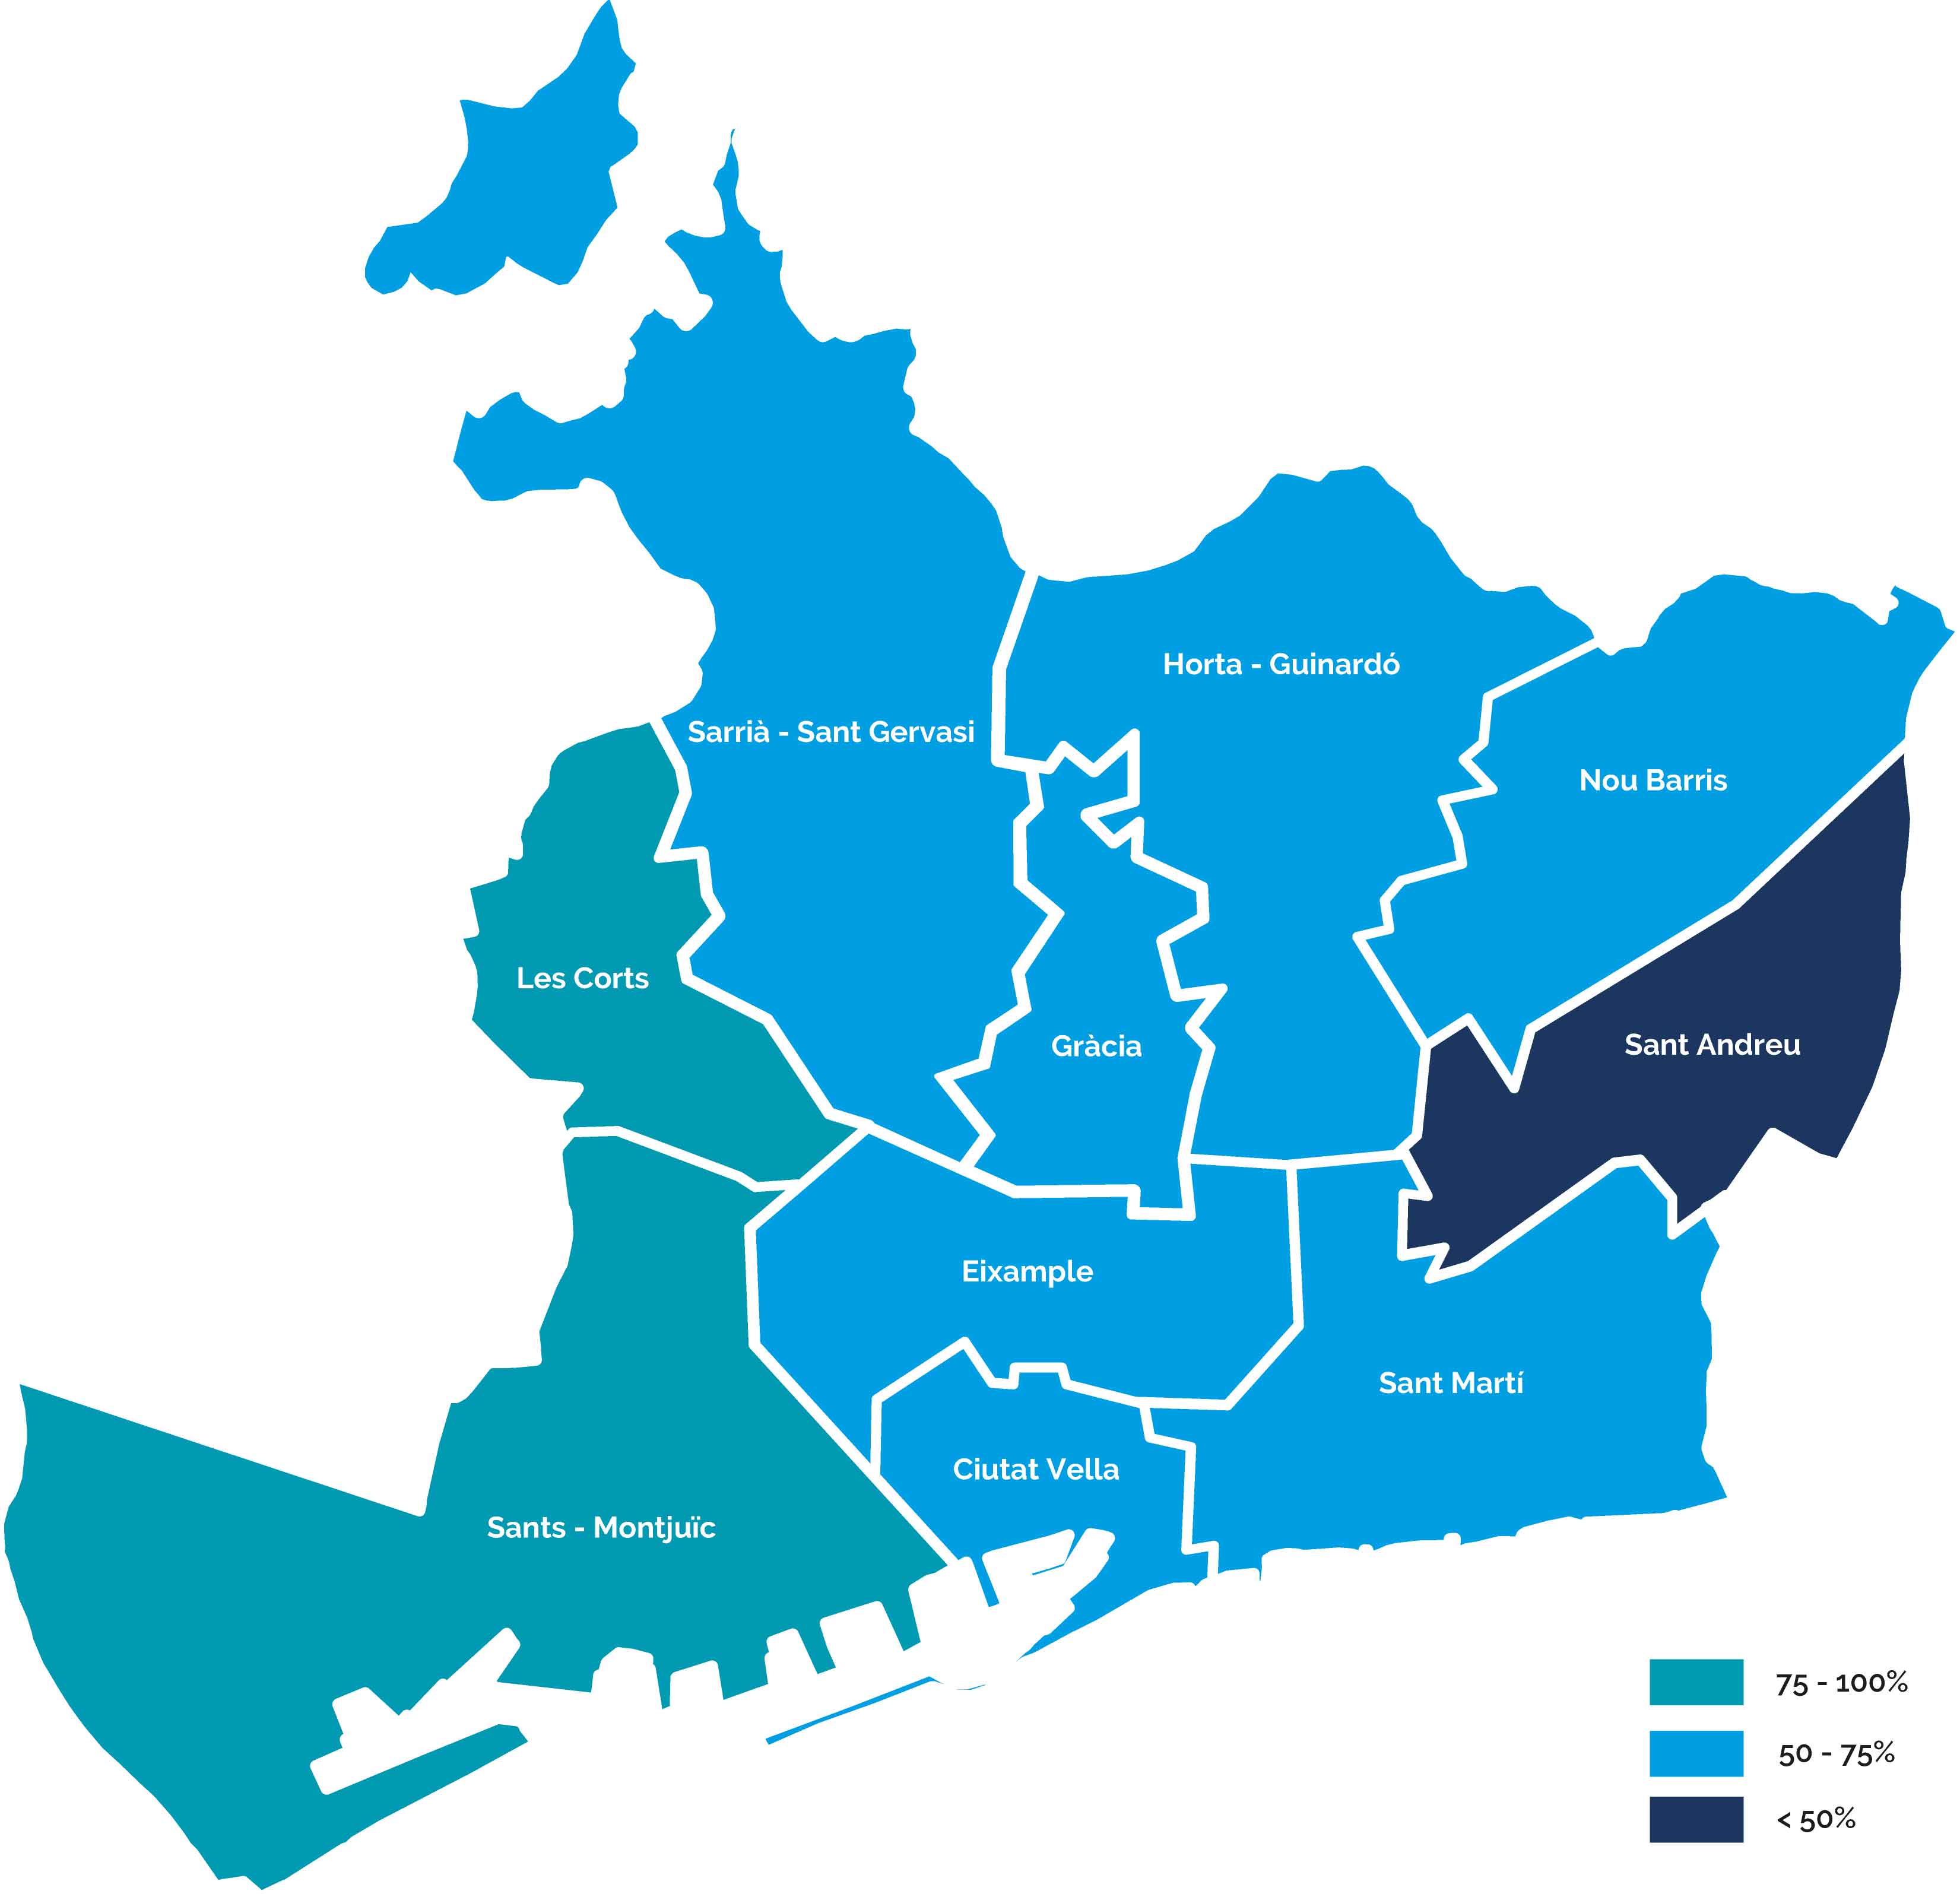 Mapa de districtes